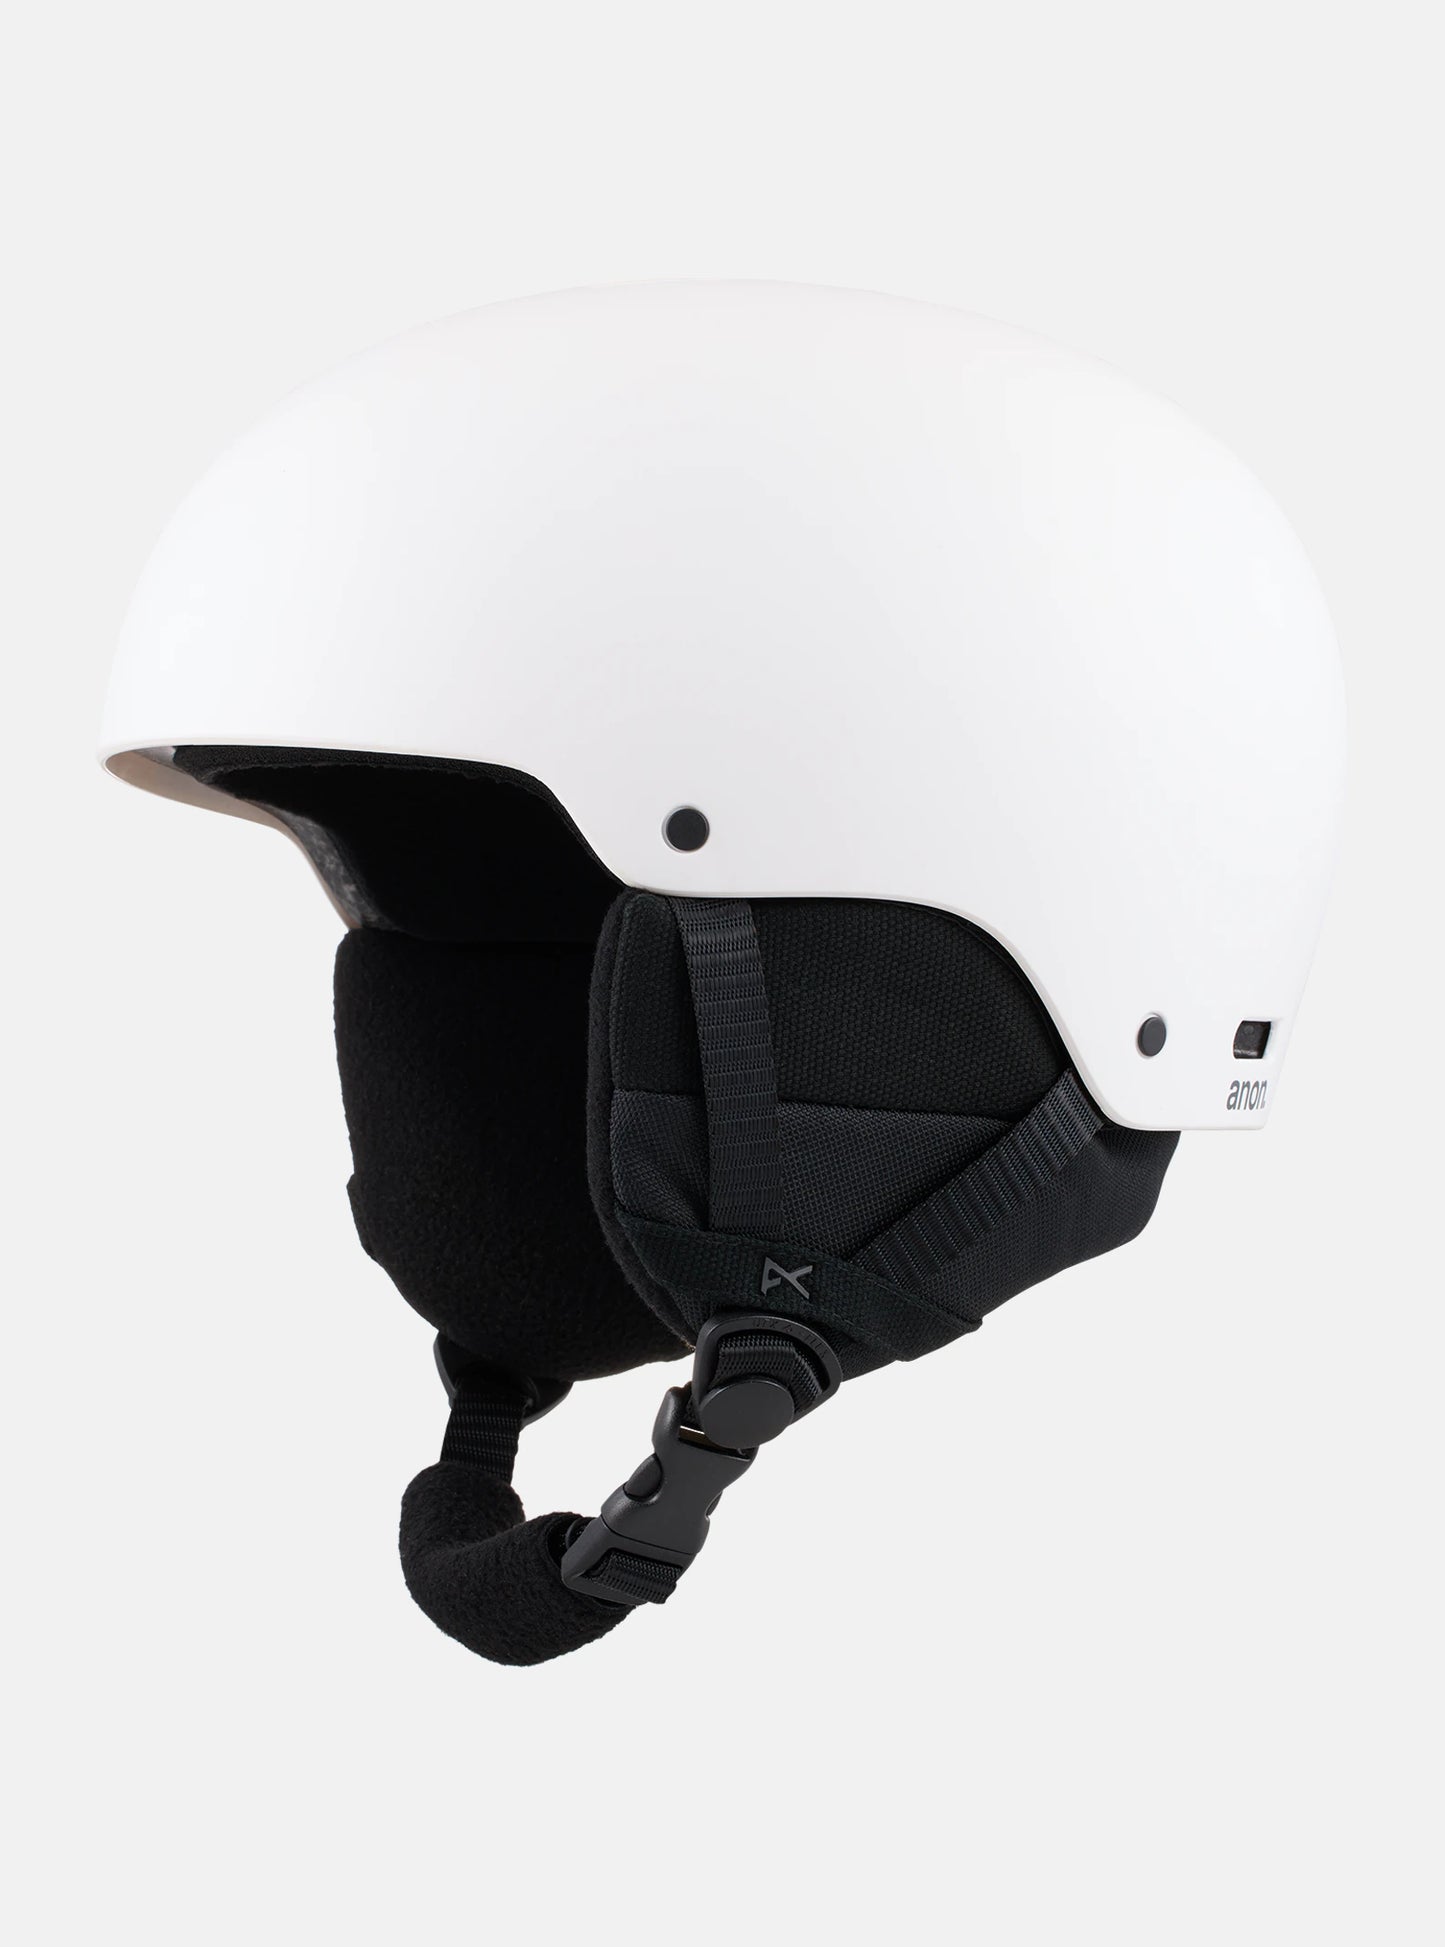 Burton Anon Raider 3 Ski & Snowboard Helmet